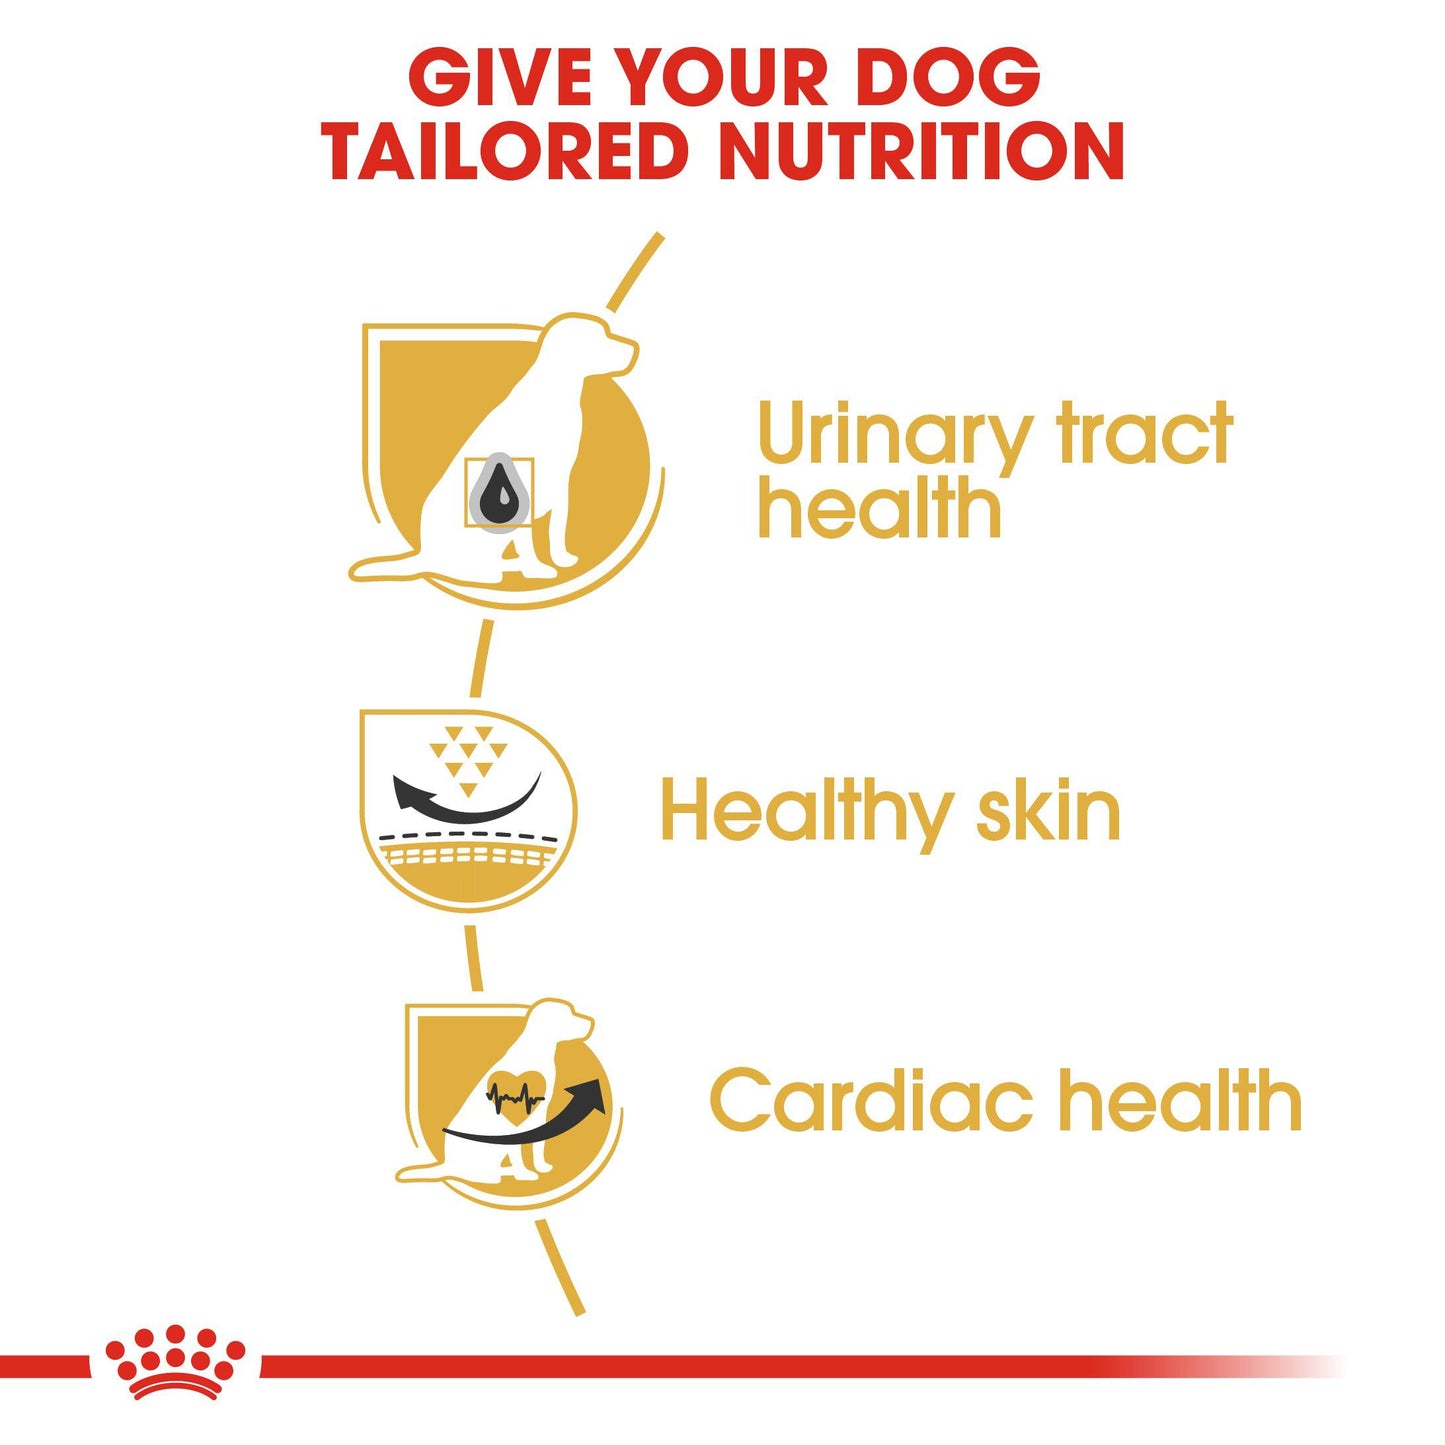 Royal Canin Breed Health Nutrition Dalmatian Adult